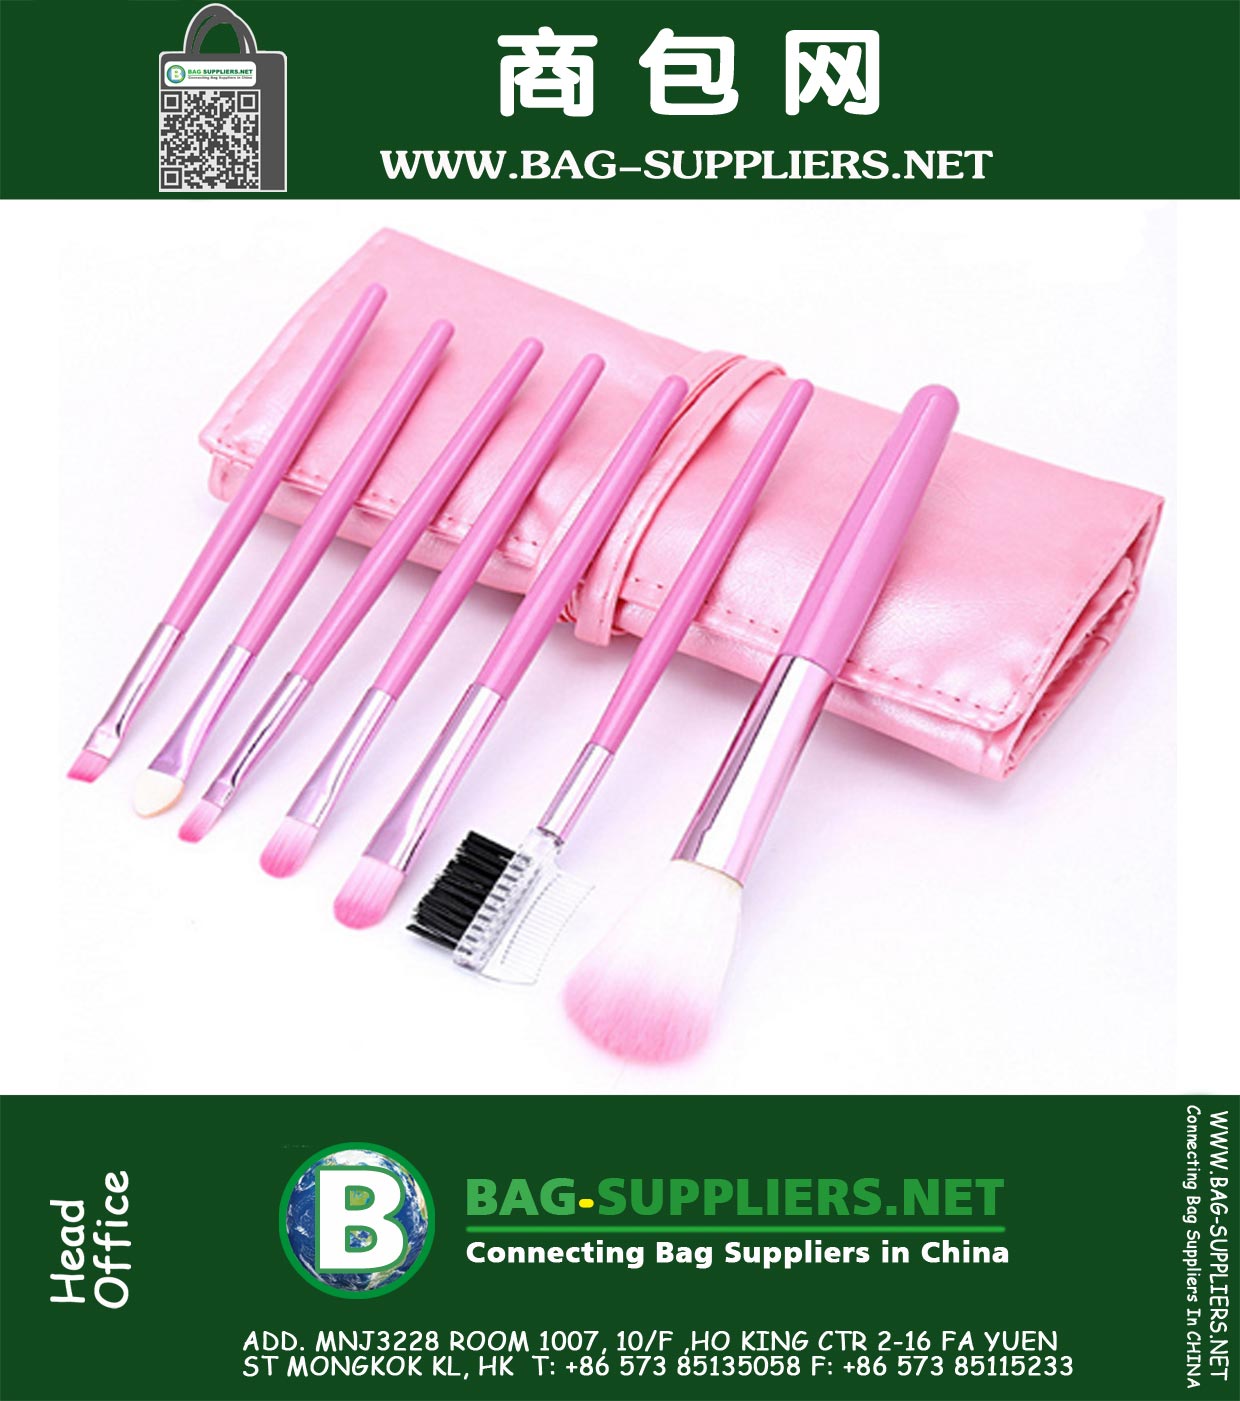 7 stuks make-up kwasten roze leren Bag Set, Professional Gezicht En Eye Shadow Brush Beauty Tool Make-up Kits